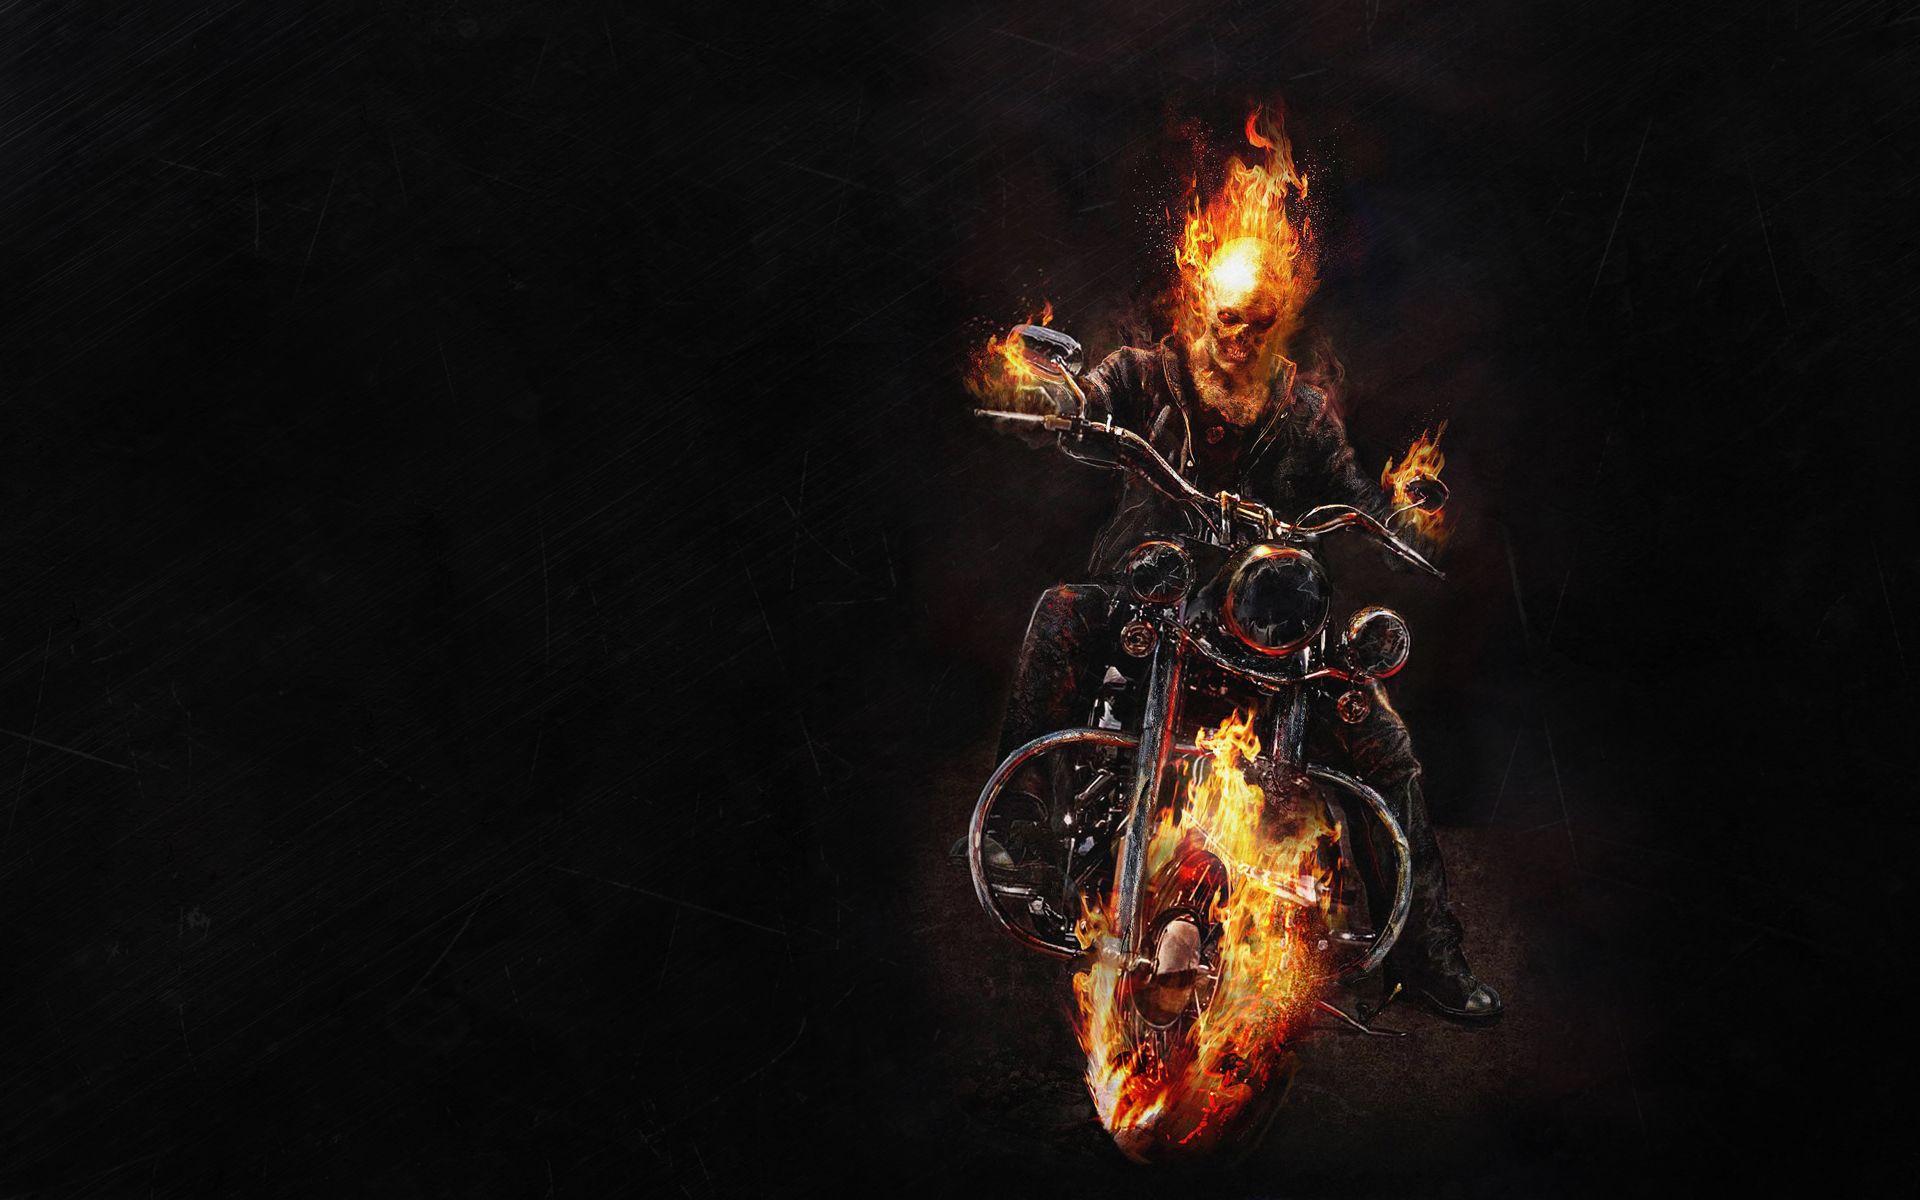 skull and skeliton picture. Ghost Rider a skeleton fire bike dark